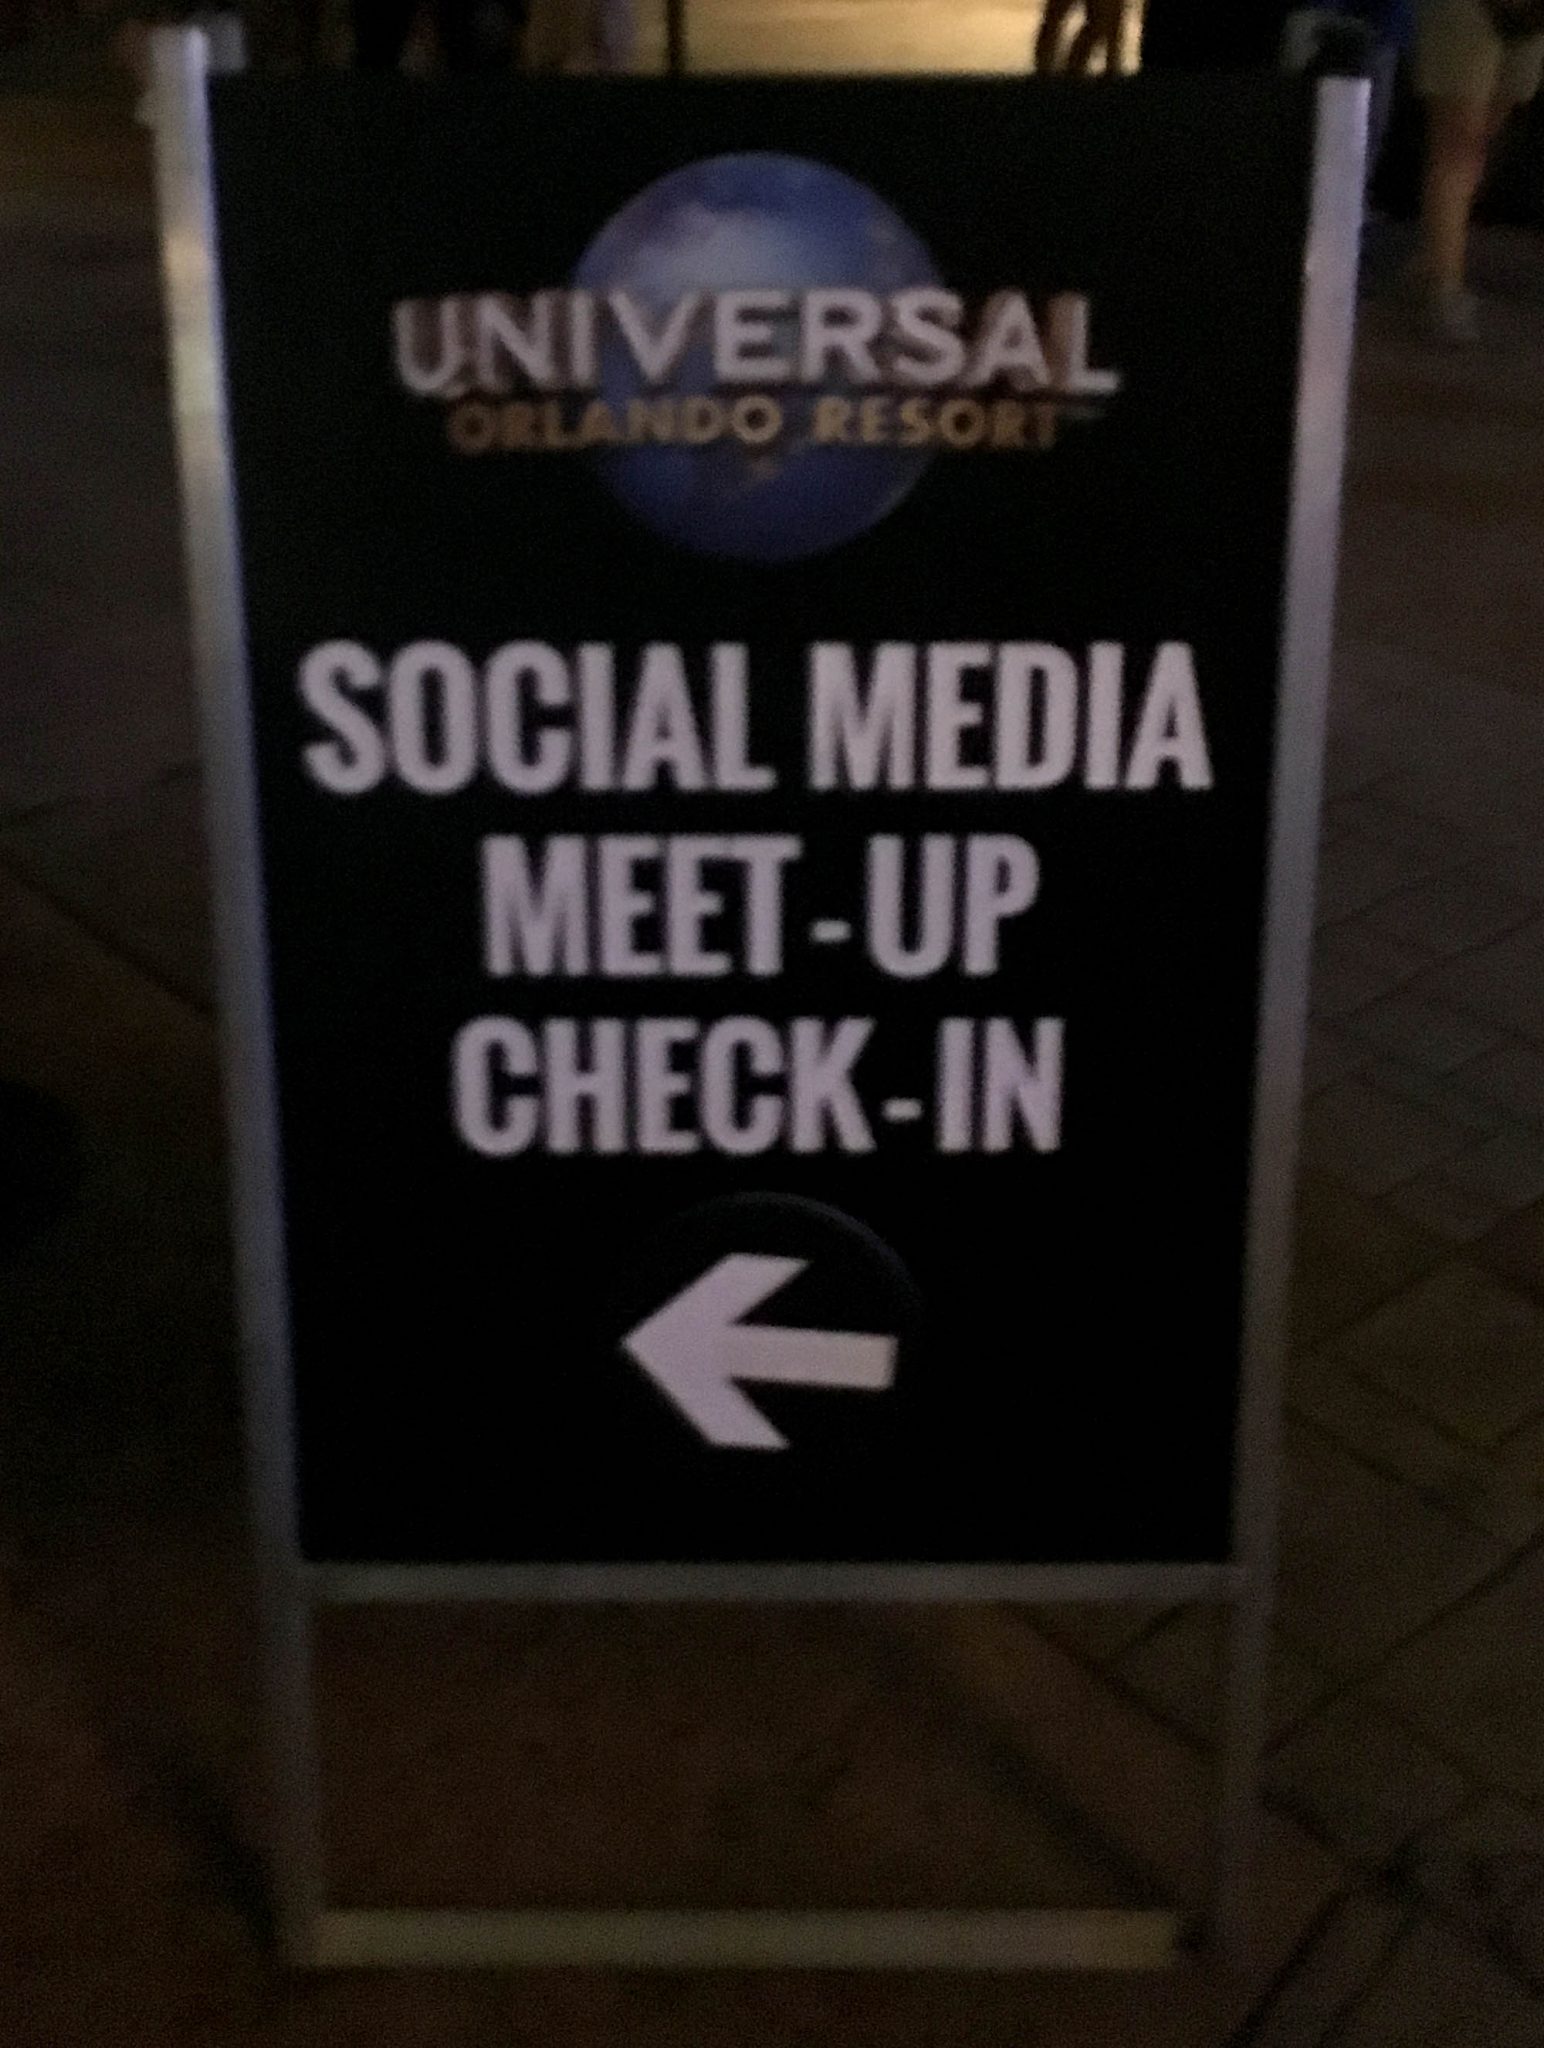 Social Media Meet Up Check In Sign at Universal